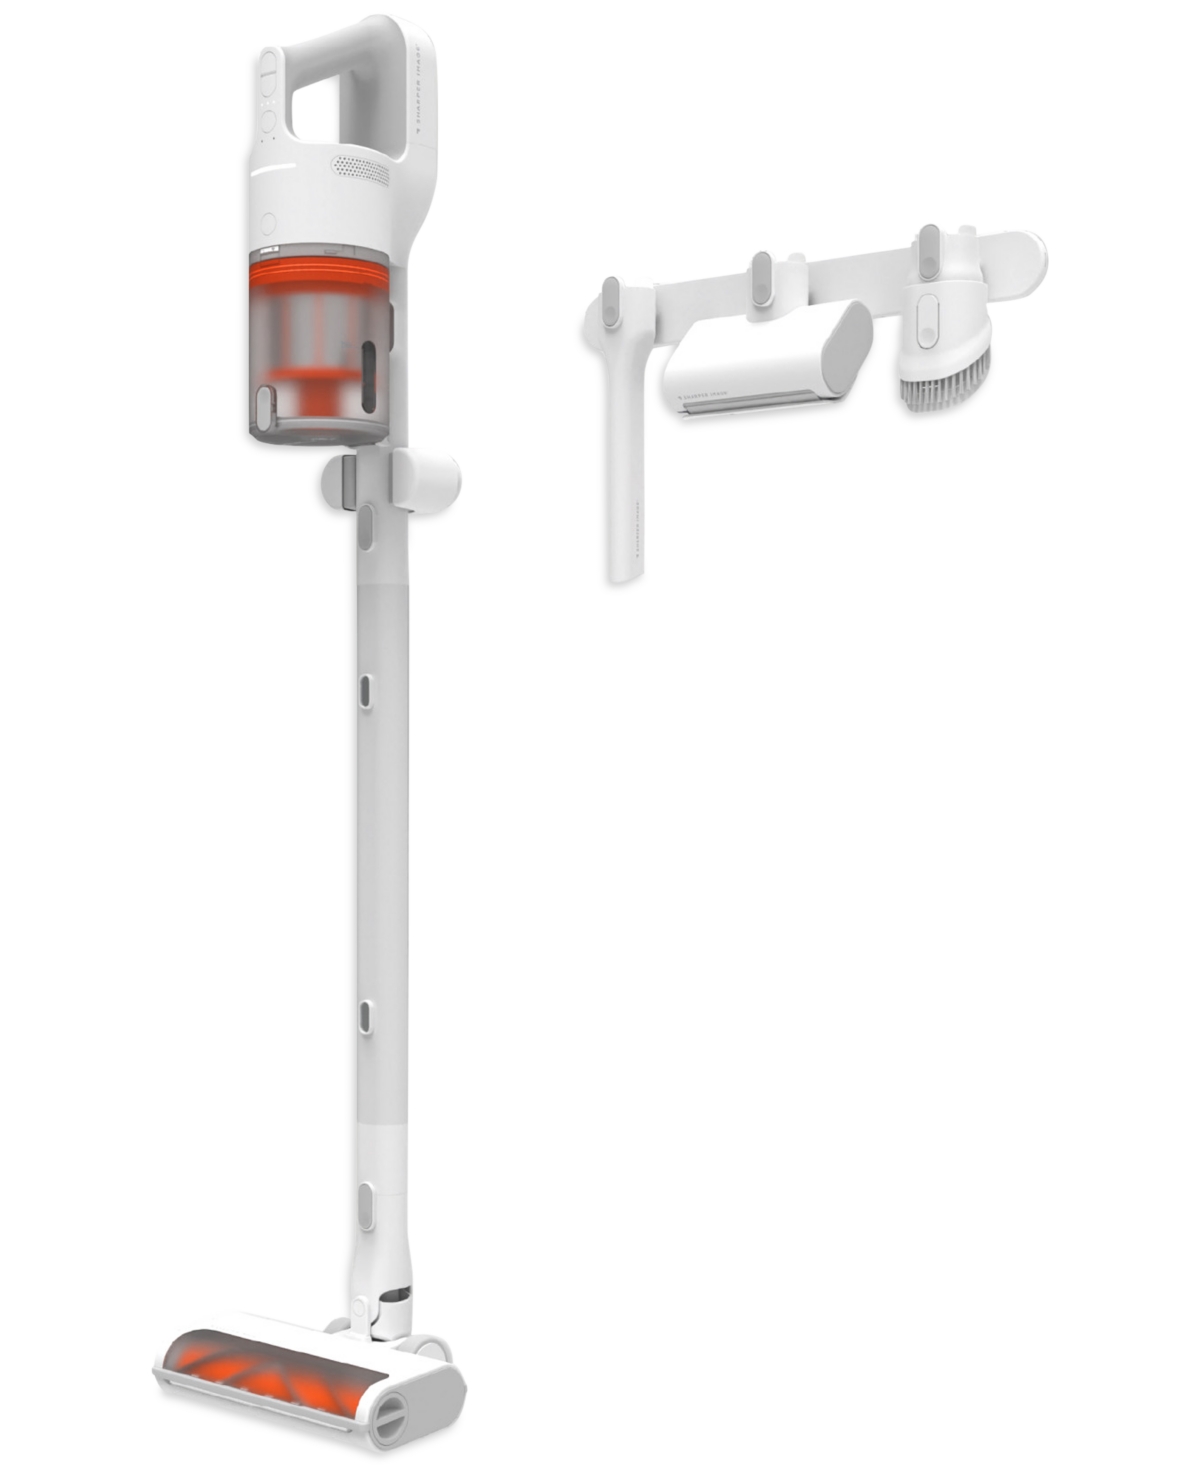 2-In-1 Cordless Stick & Handheld Vacuum - White